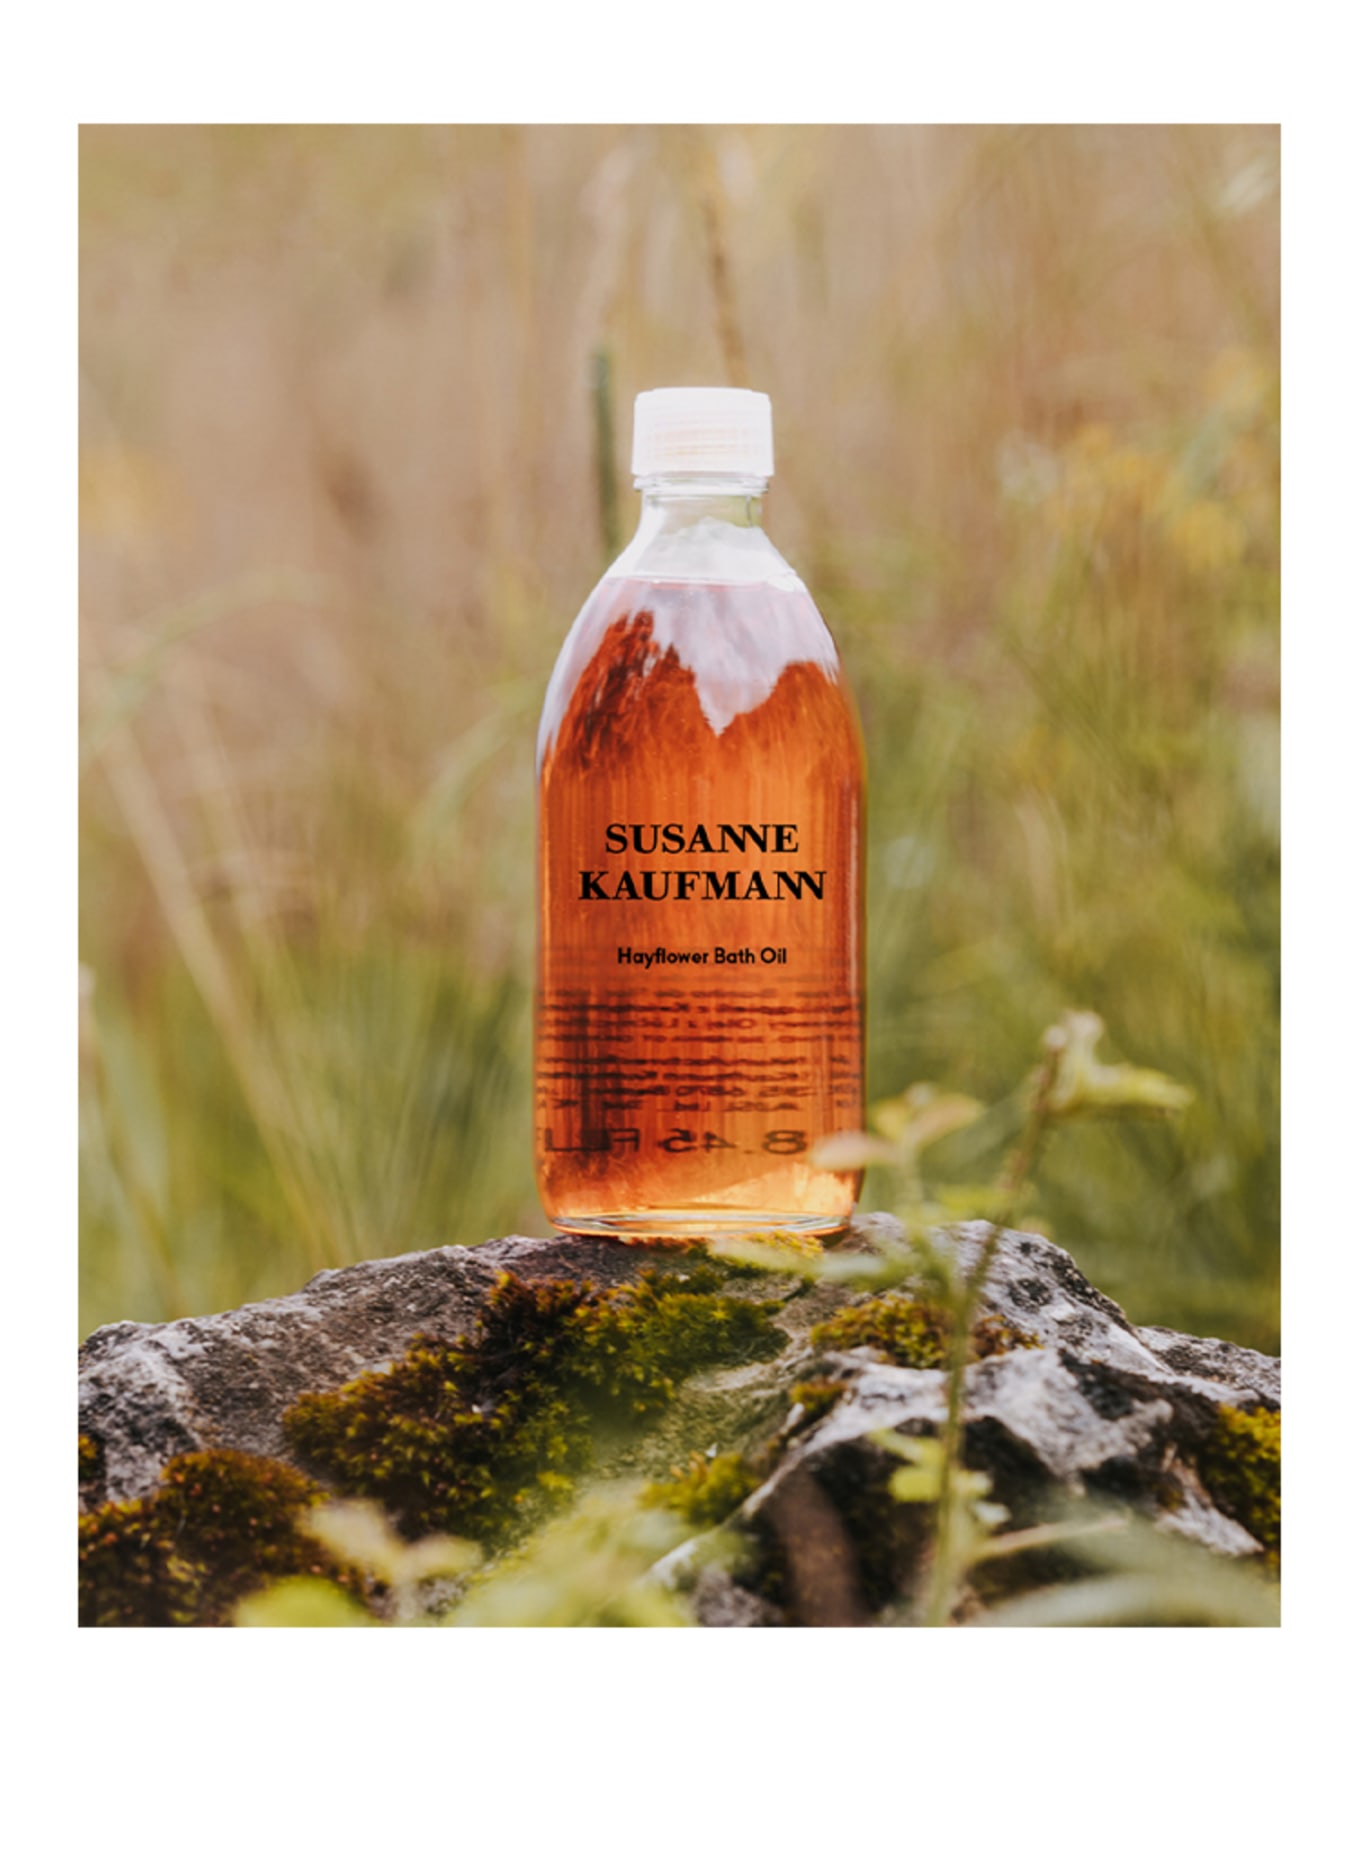 SUSANNE KAUFMANN HAYFLOWER BATH OIL (Obrázek 2)